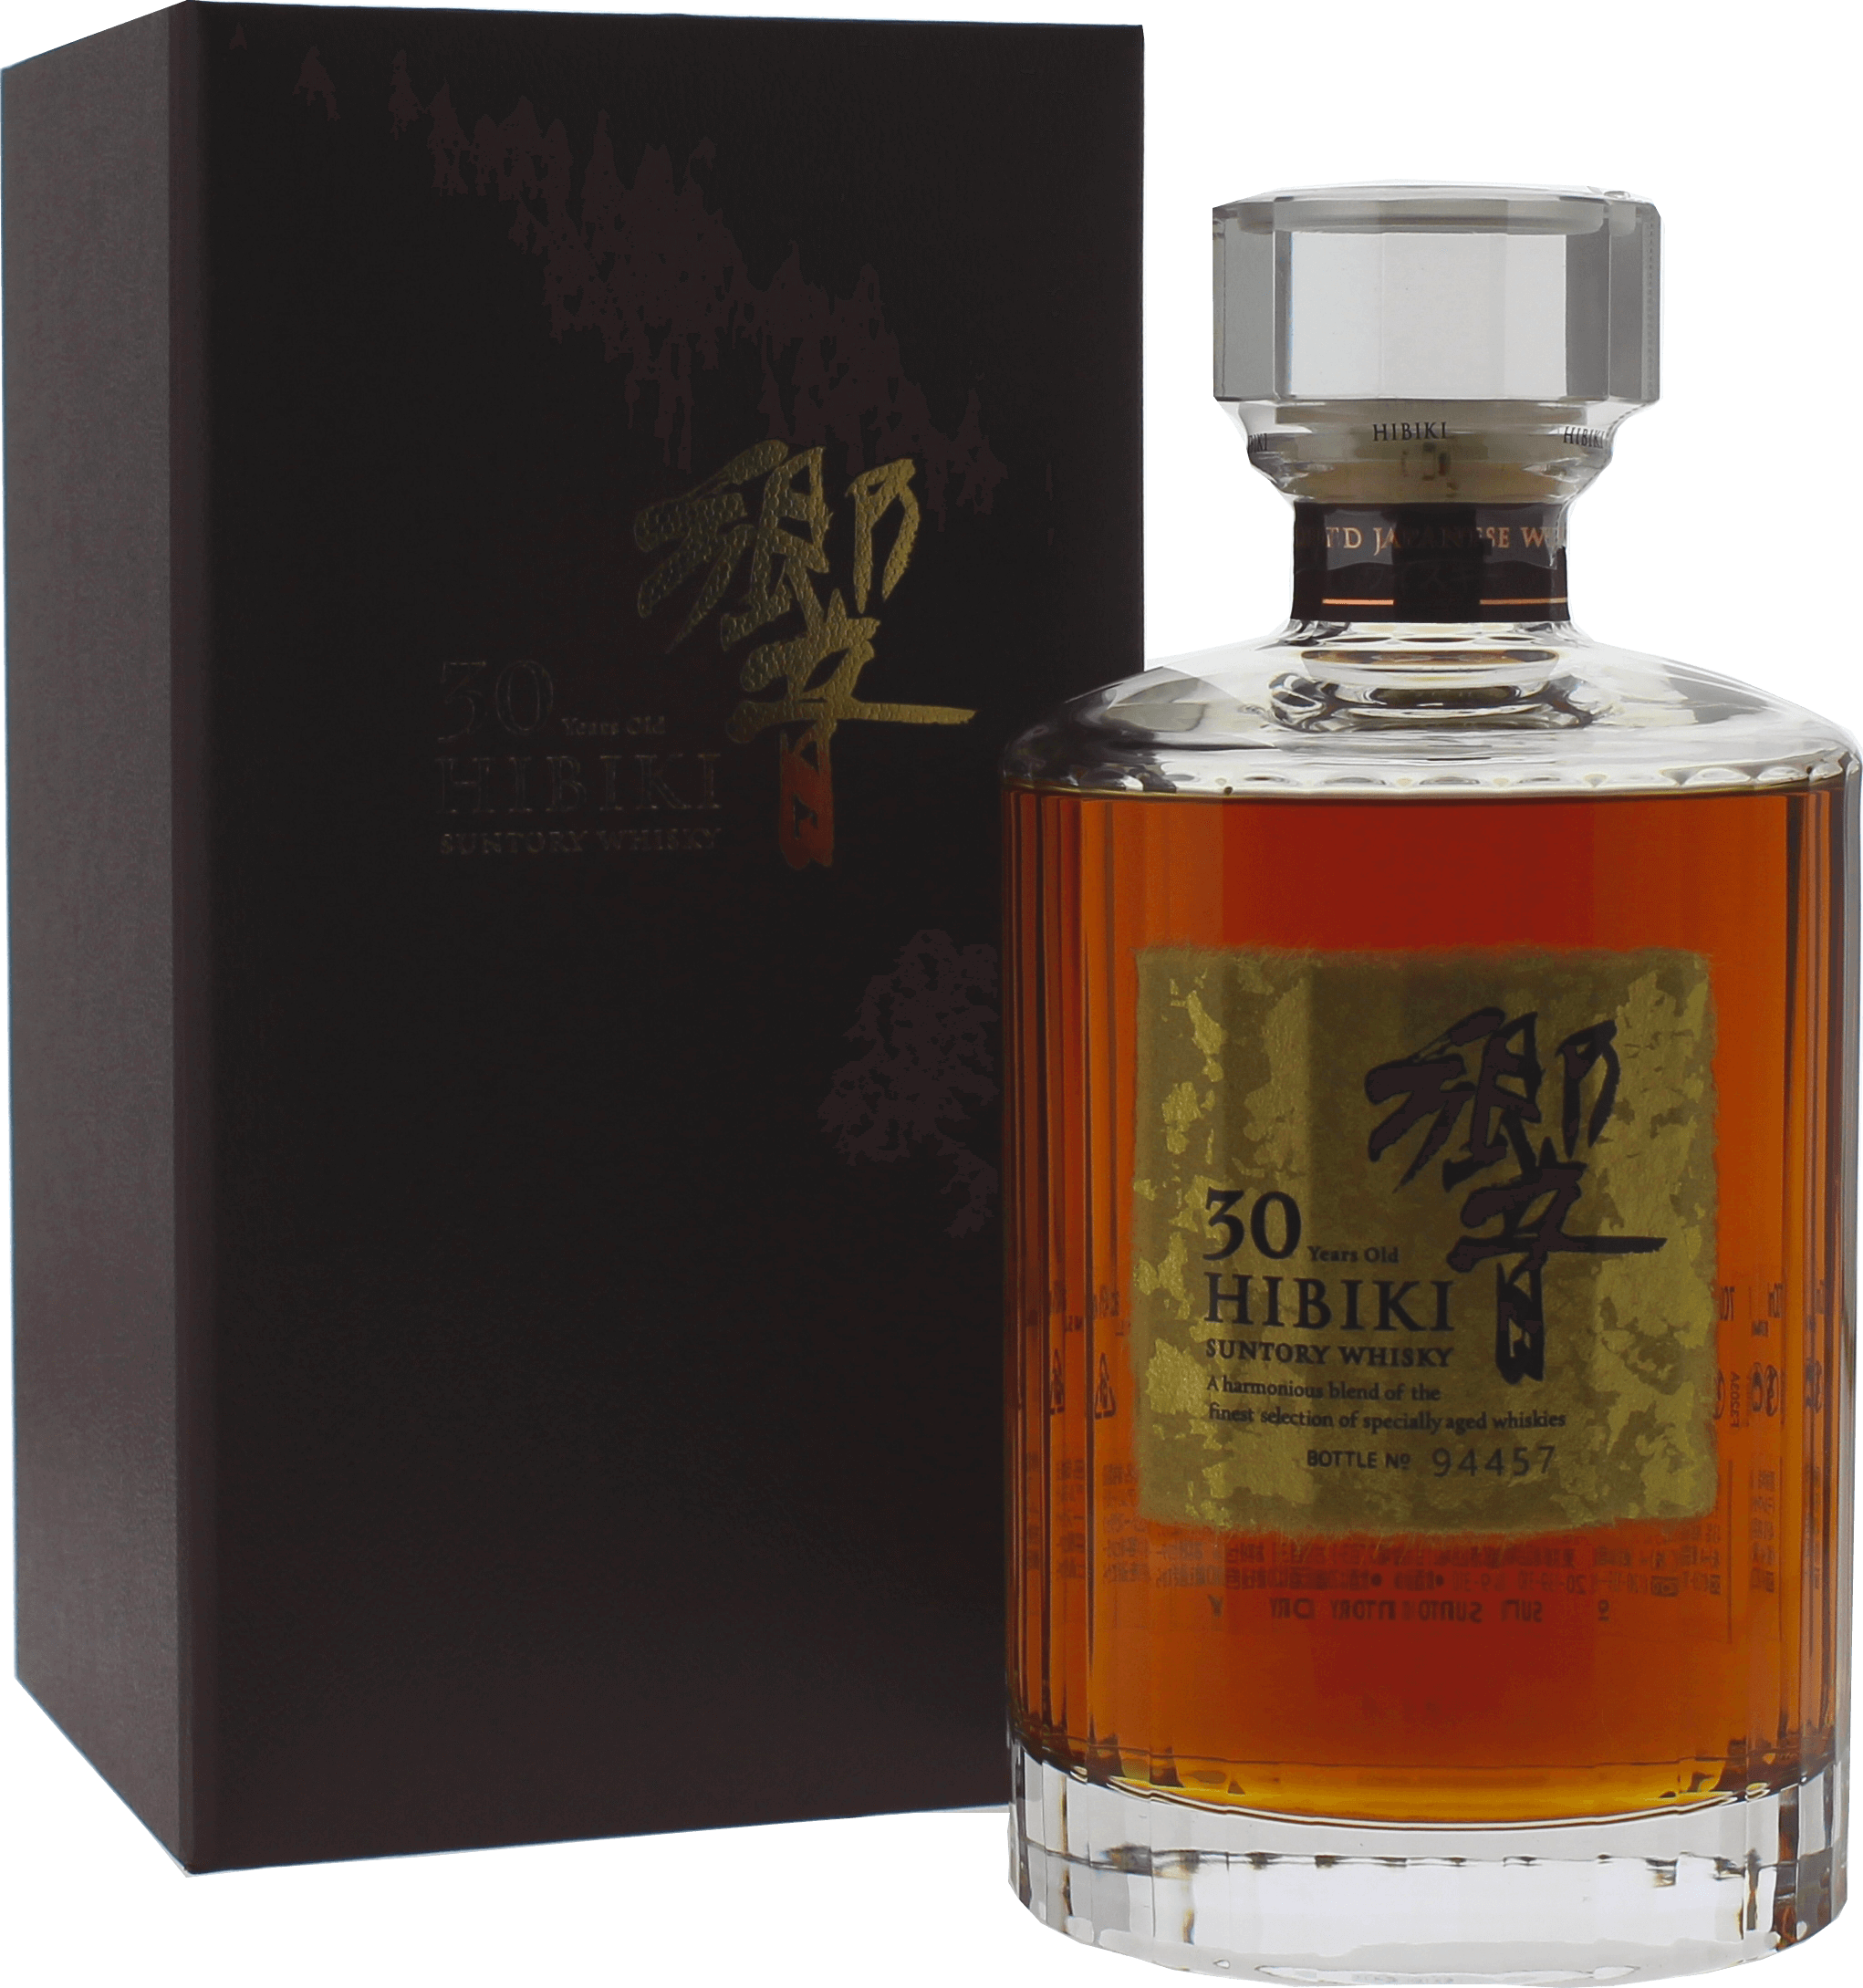 Whisky japonais hibiki japan 30 ans 43° (Whisky, spiritueux) en